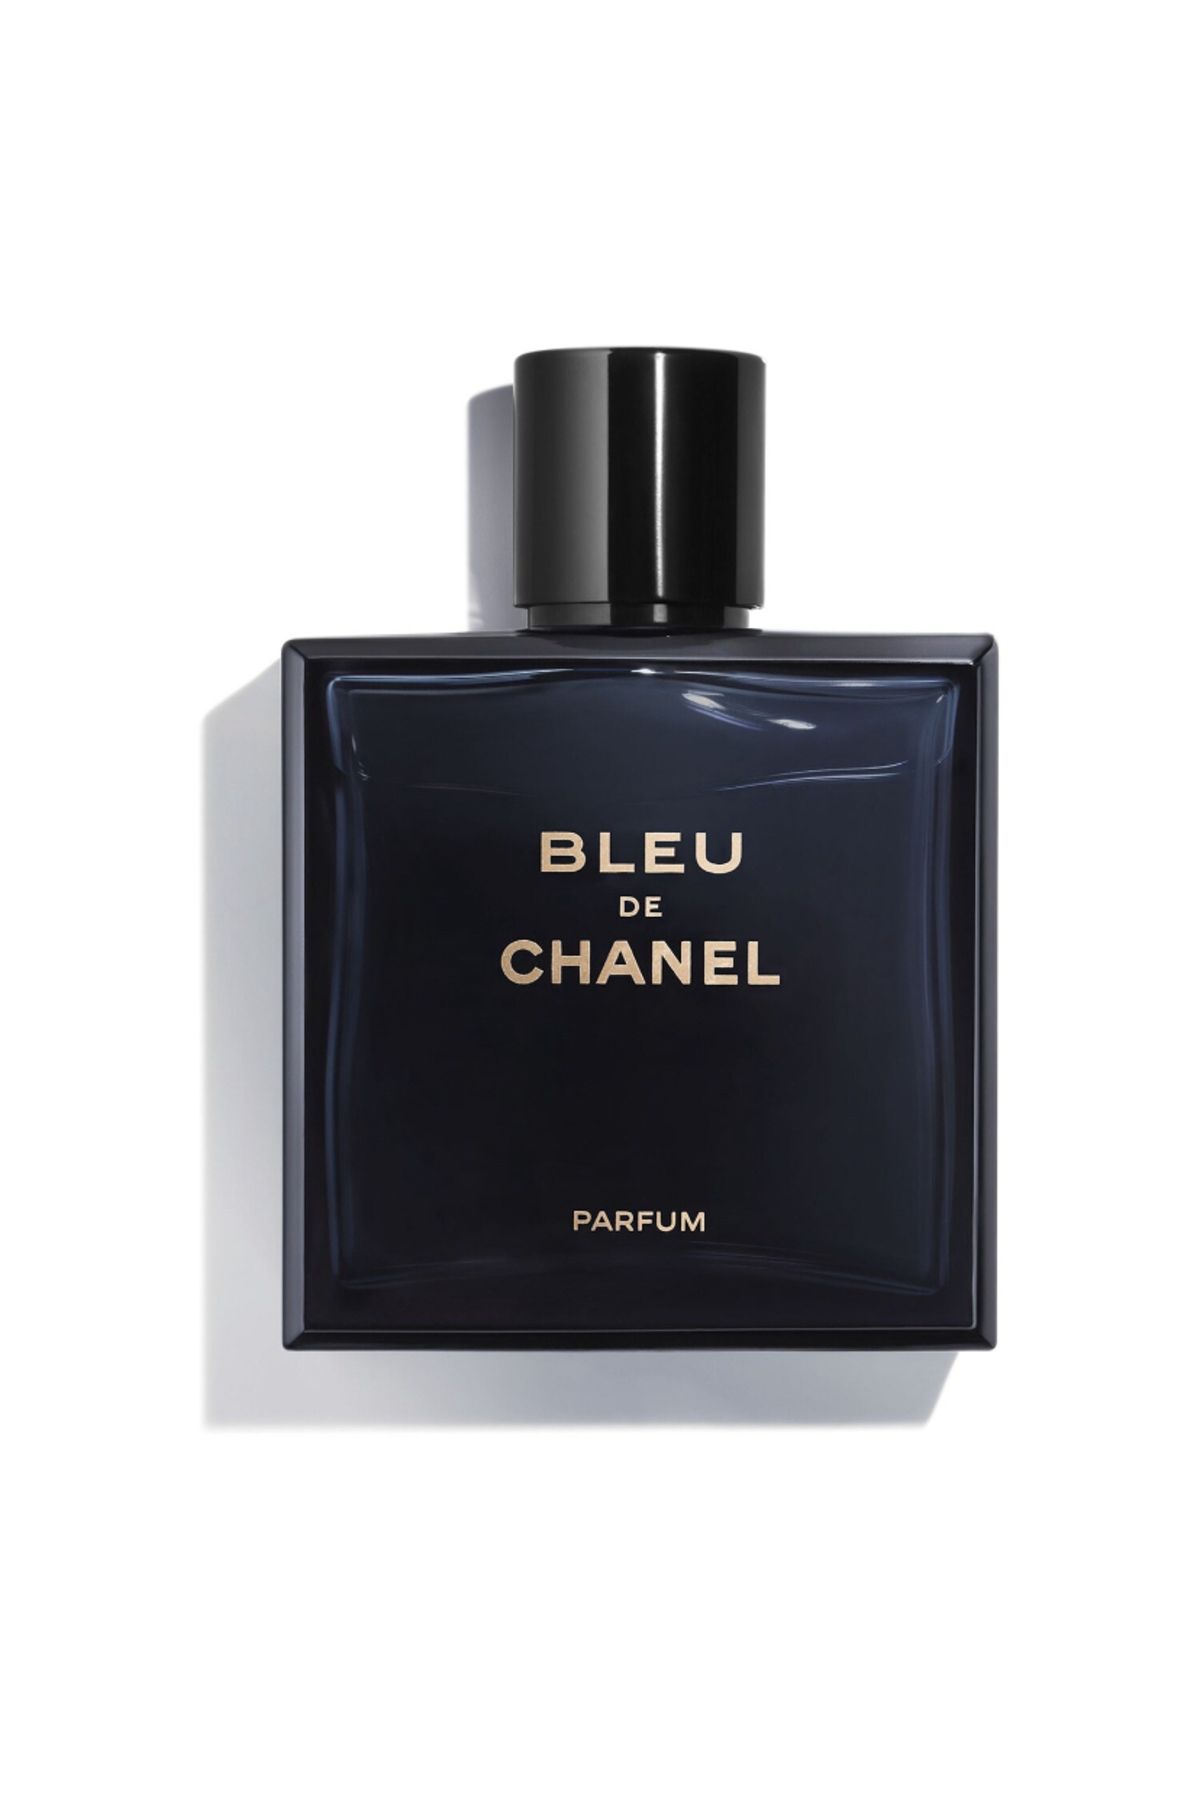 Chanel BLEU DE CHANEL EDP MAN PARFUM 100ml Pinkestcosmetics